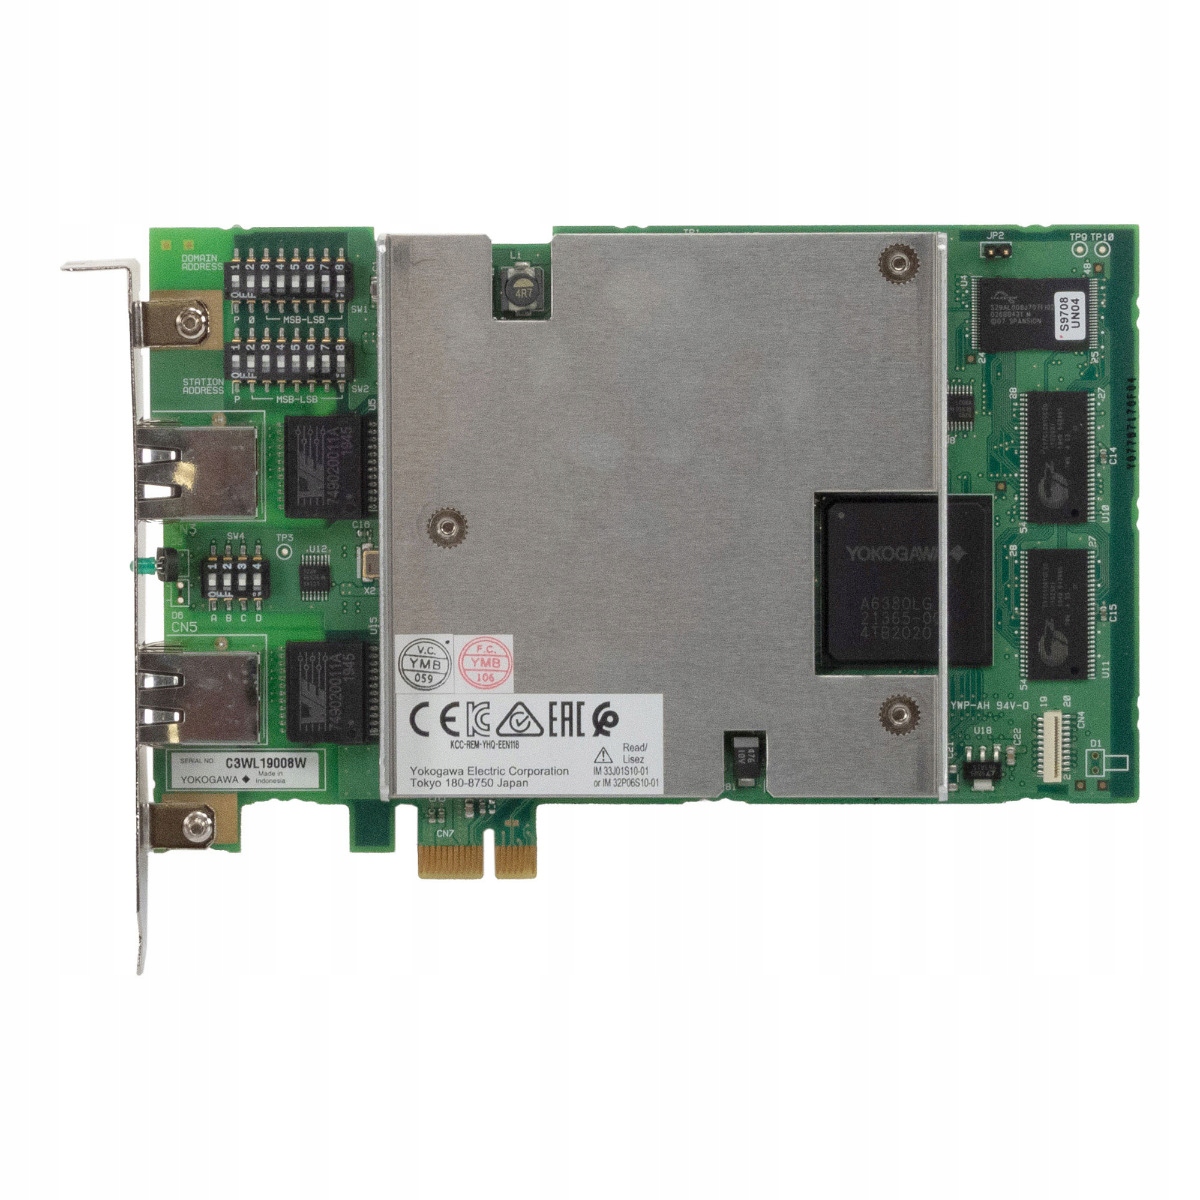 Yokogawa VI702 S1 Vnet/IP Interface Card PCIe